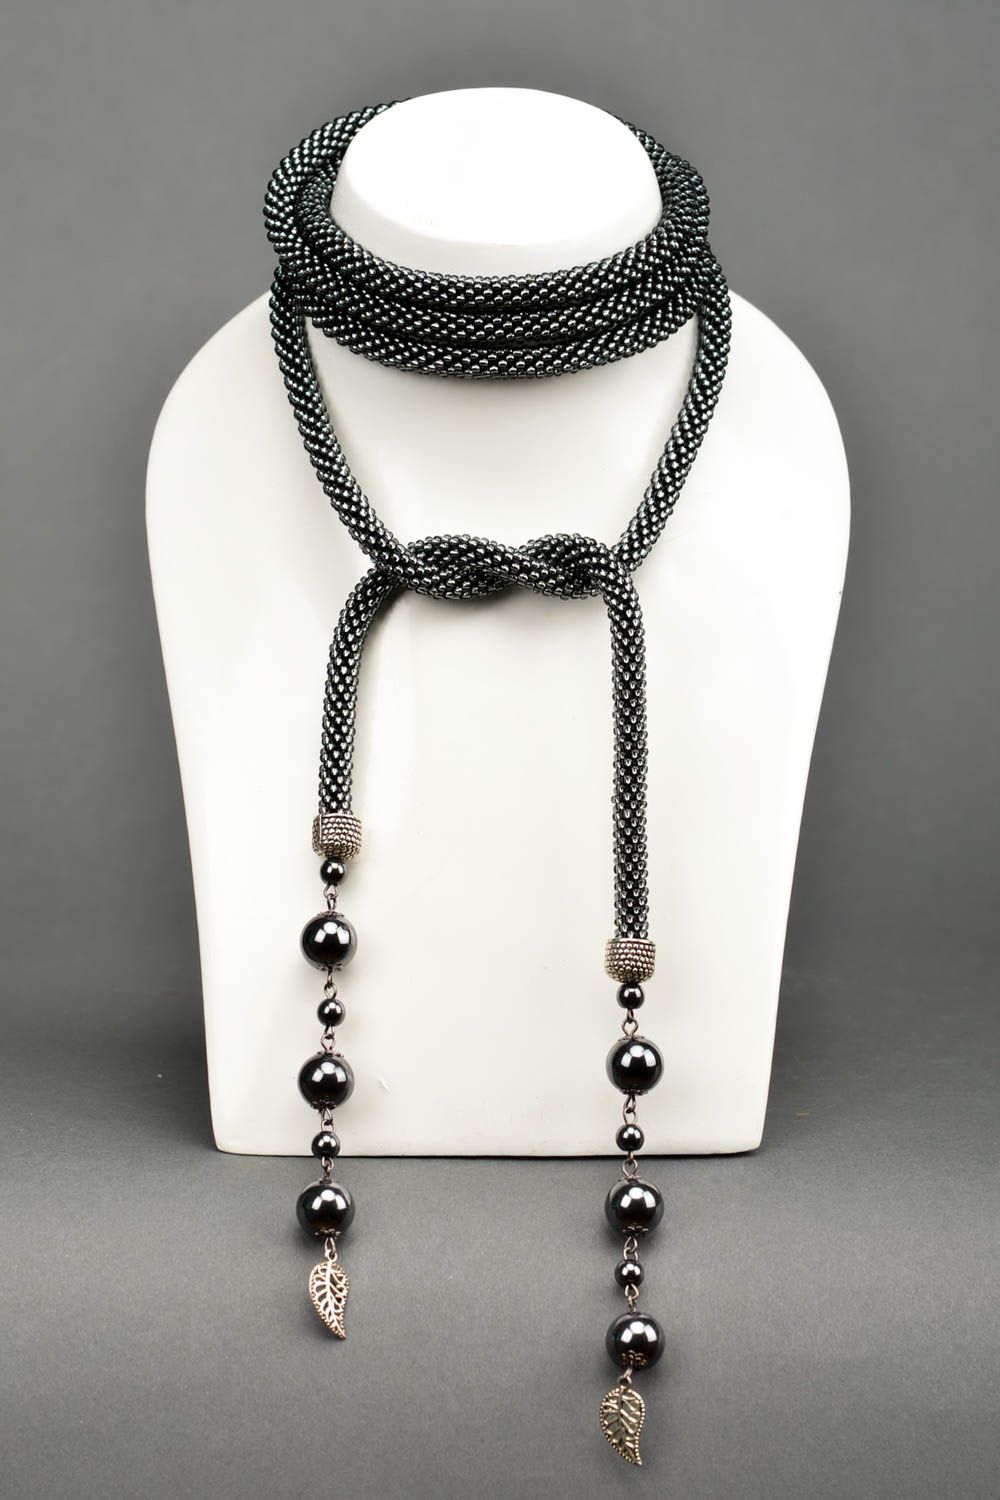 Handmade unusual beaded necklace stylish elegant necklace cute jewelry photo 1